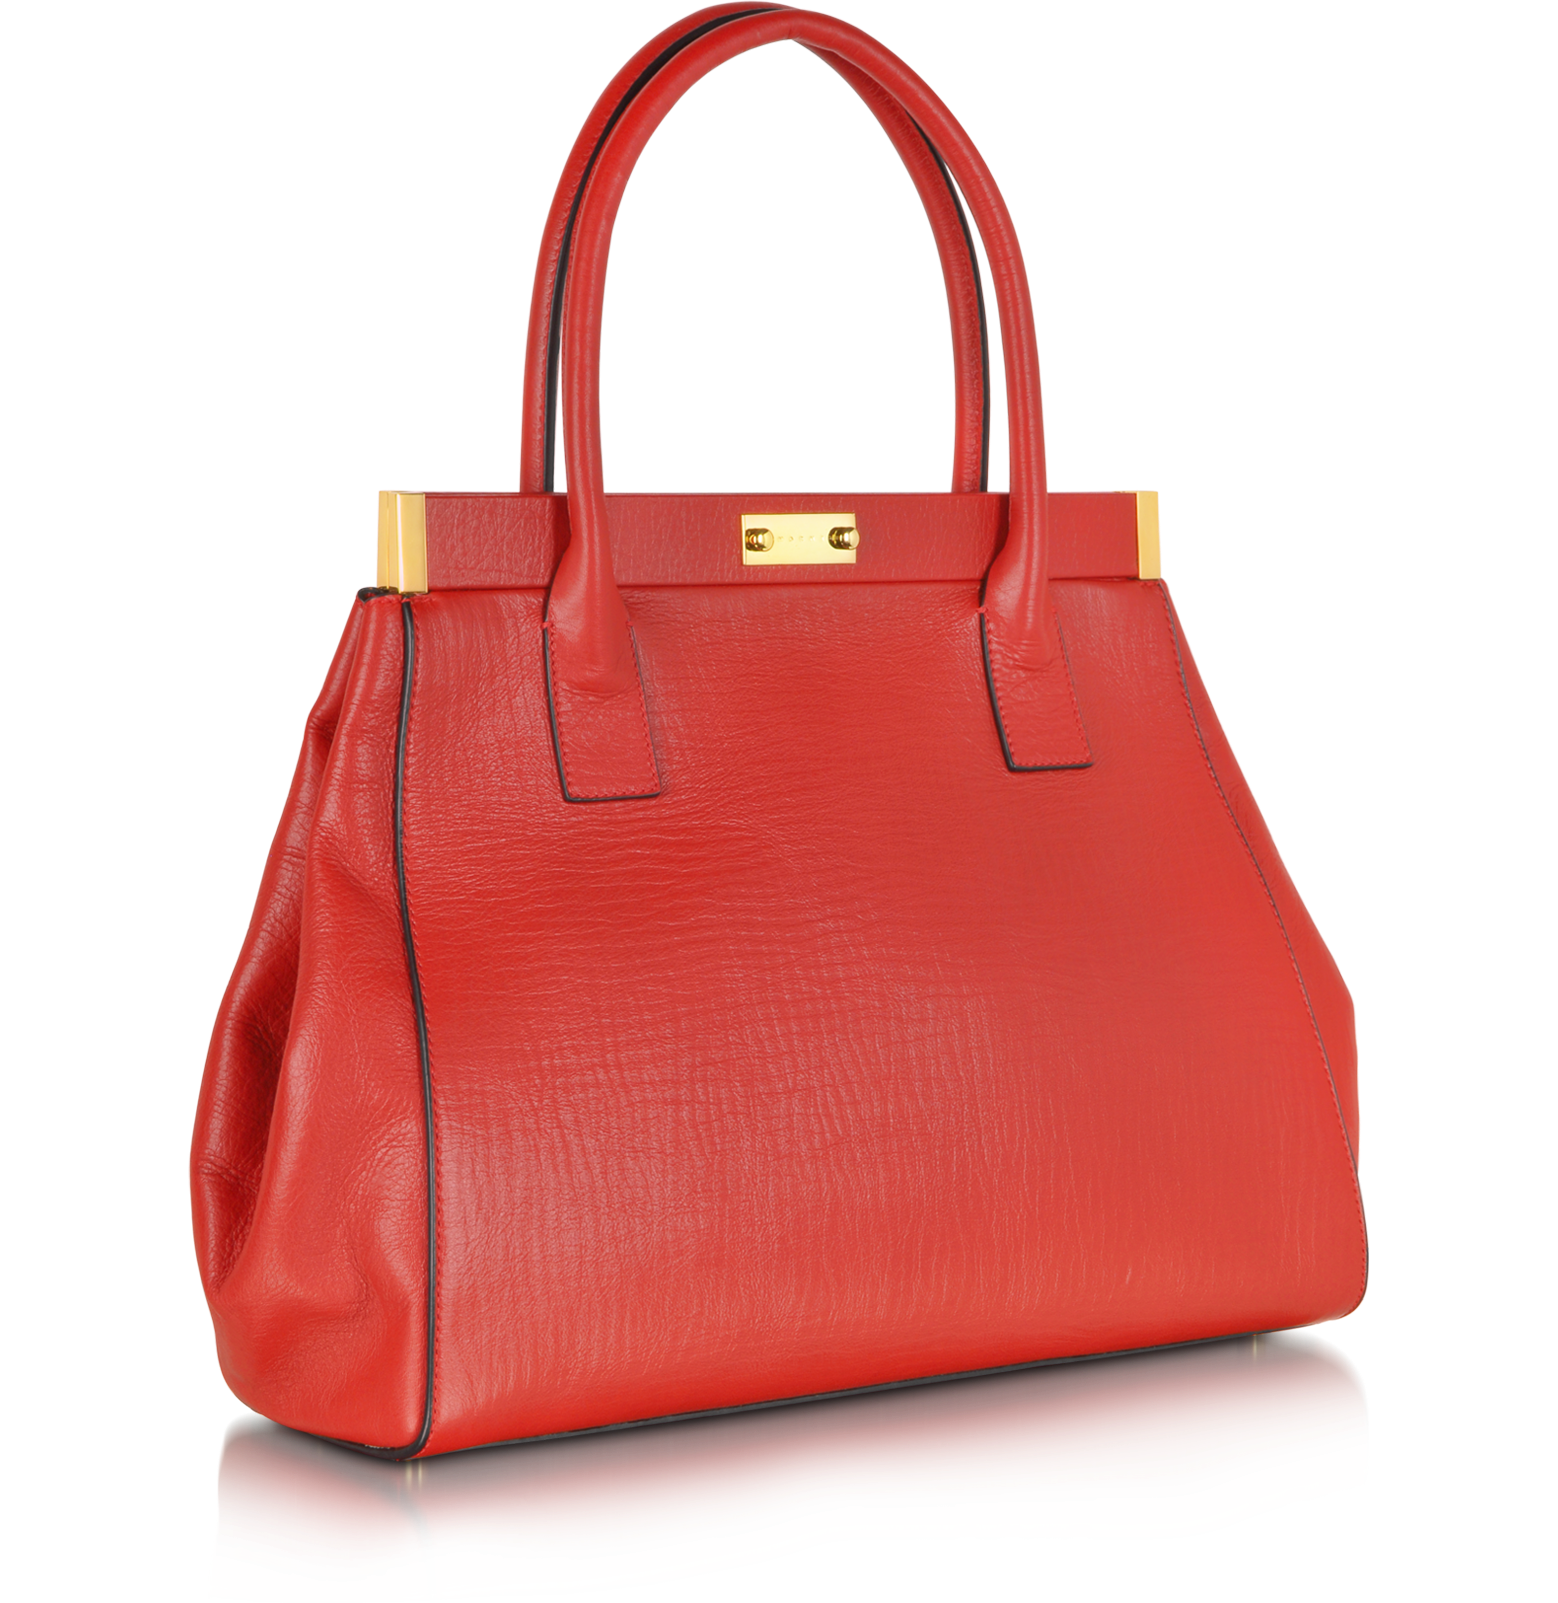 Marni Deep Red Leather Handbag at FORZIERI